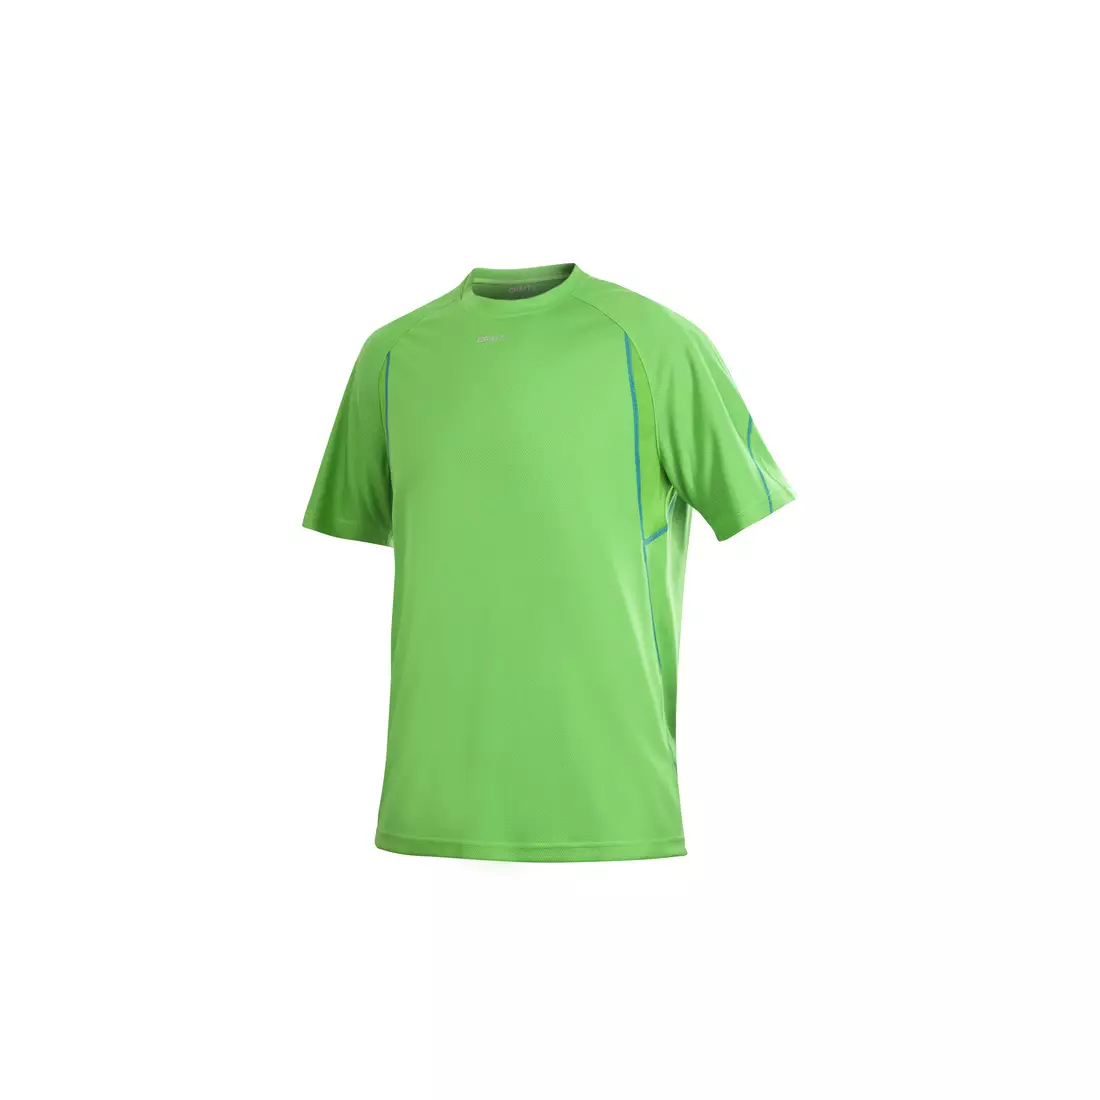 CRAFT ACTIVE RUN 1900655-2606 - men's running T-shirt